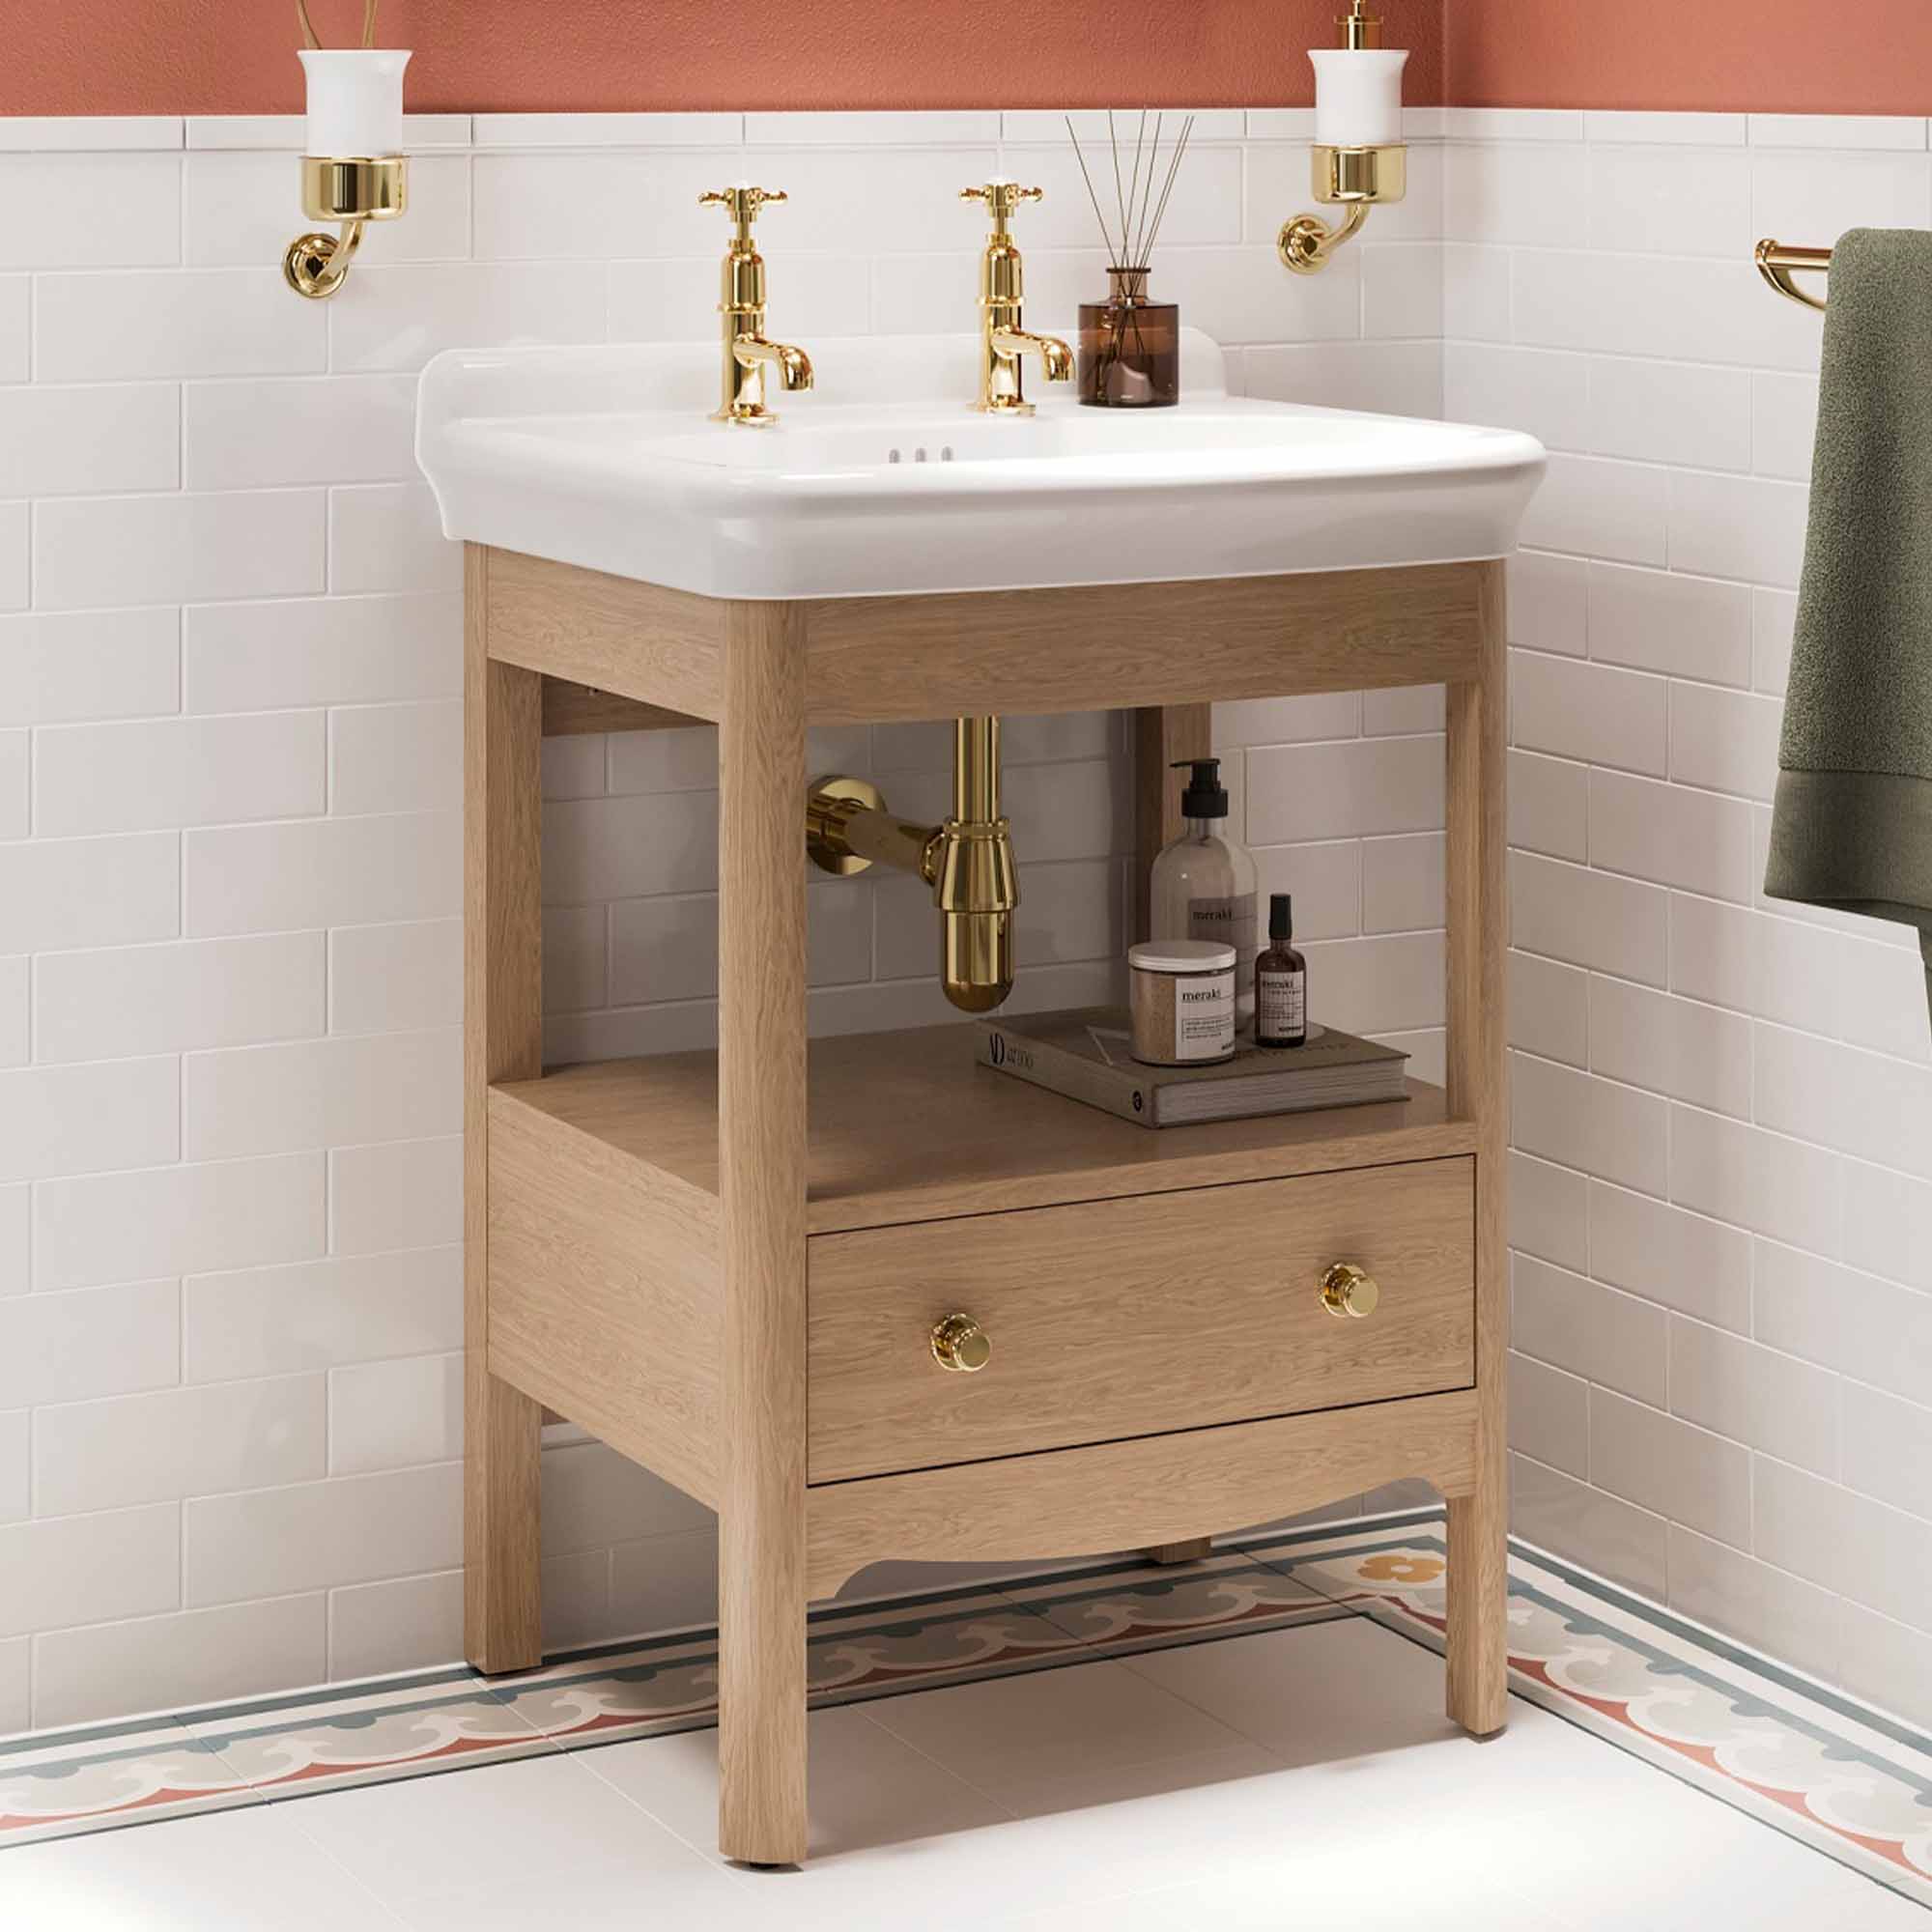 burlington guild 620 floorstanding single drawer vanity unit washbasin light oak